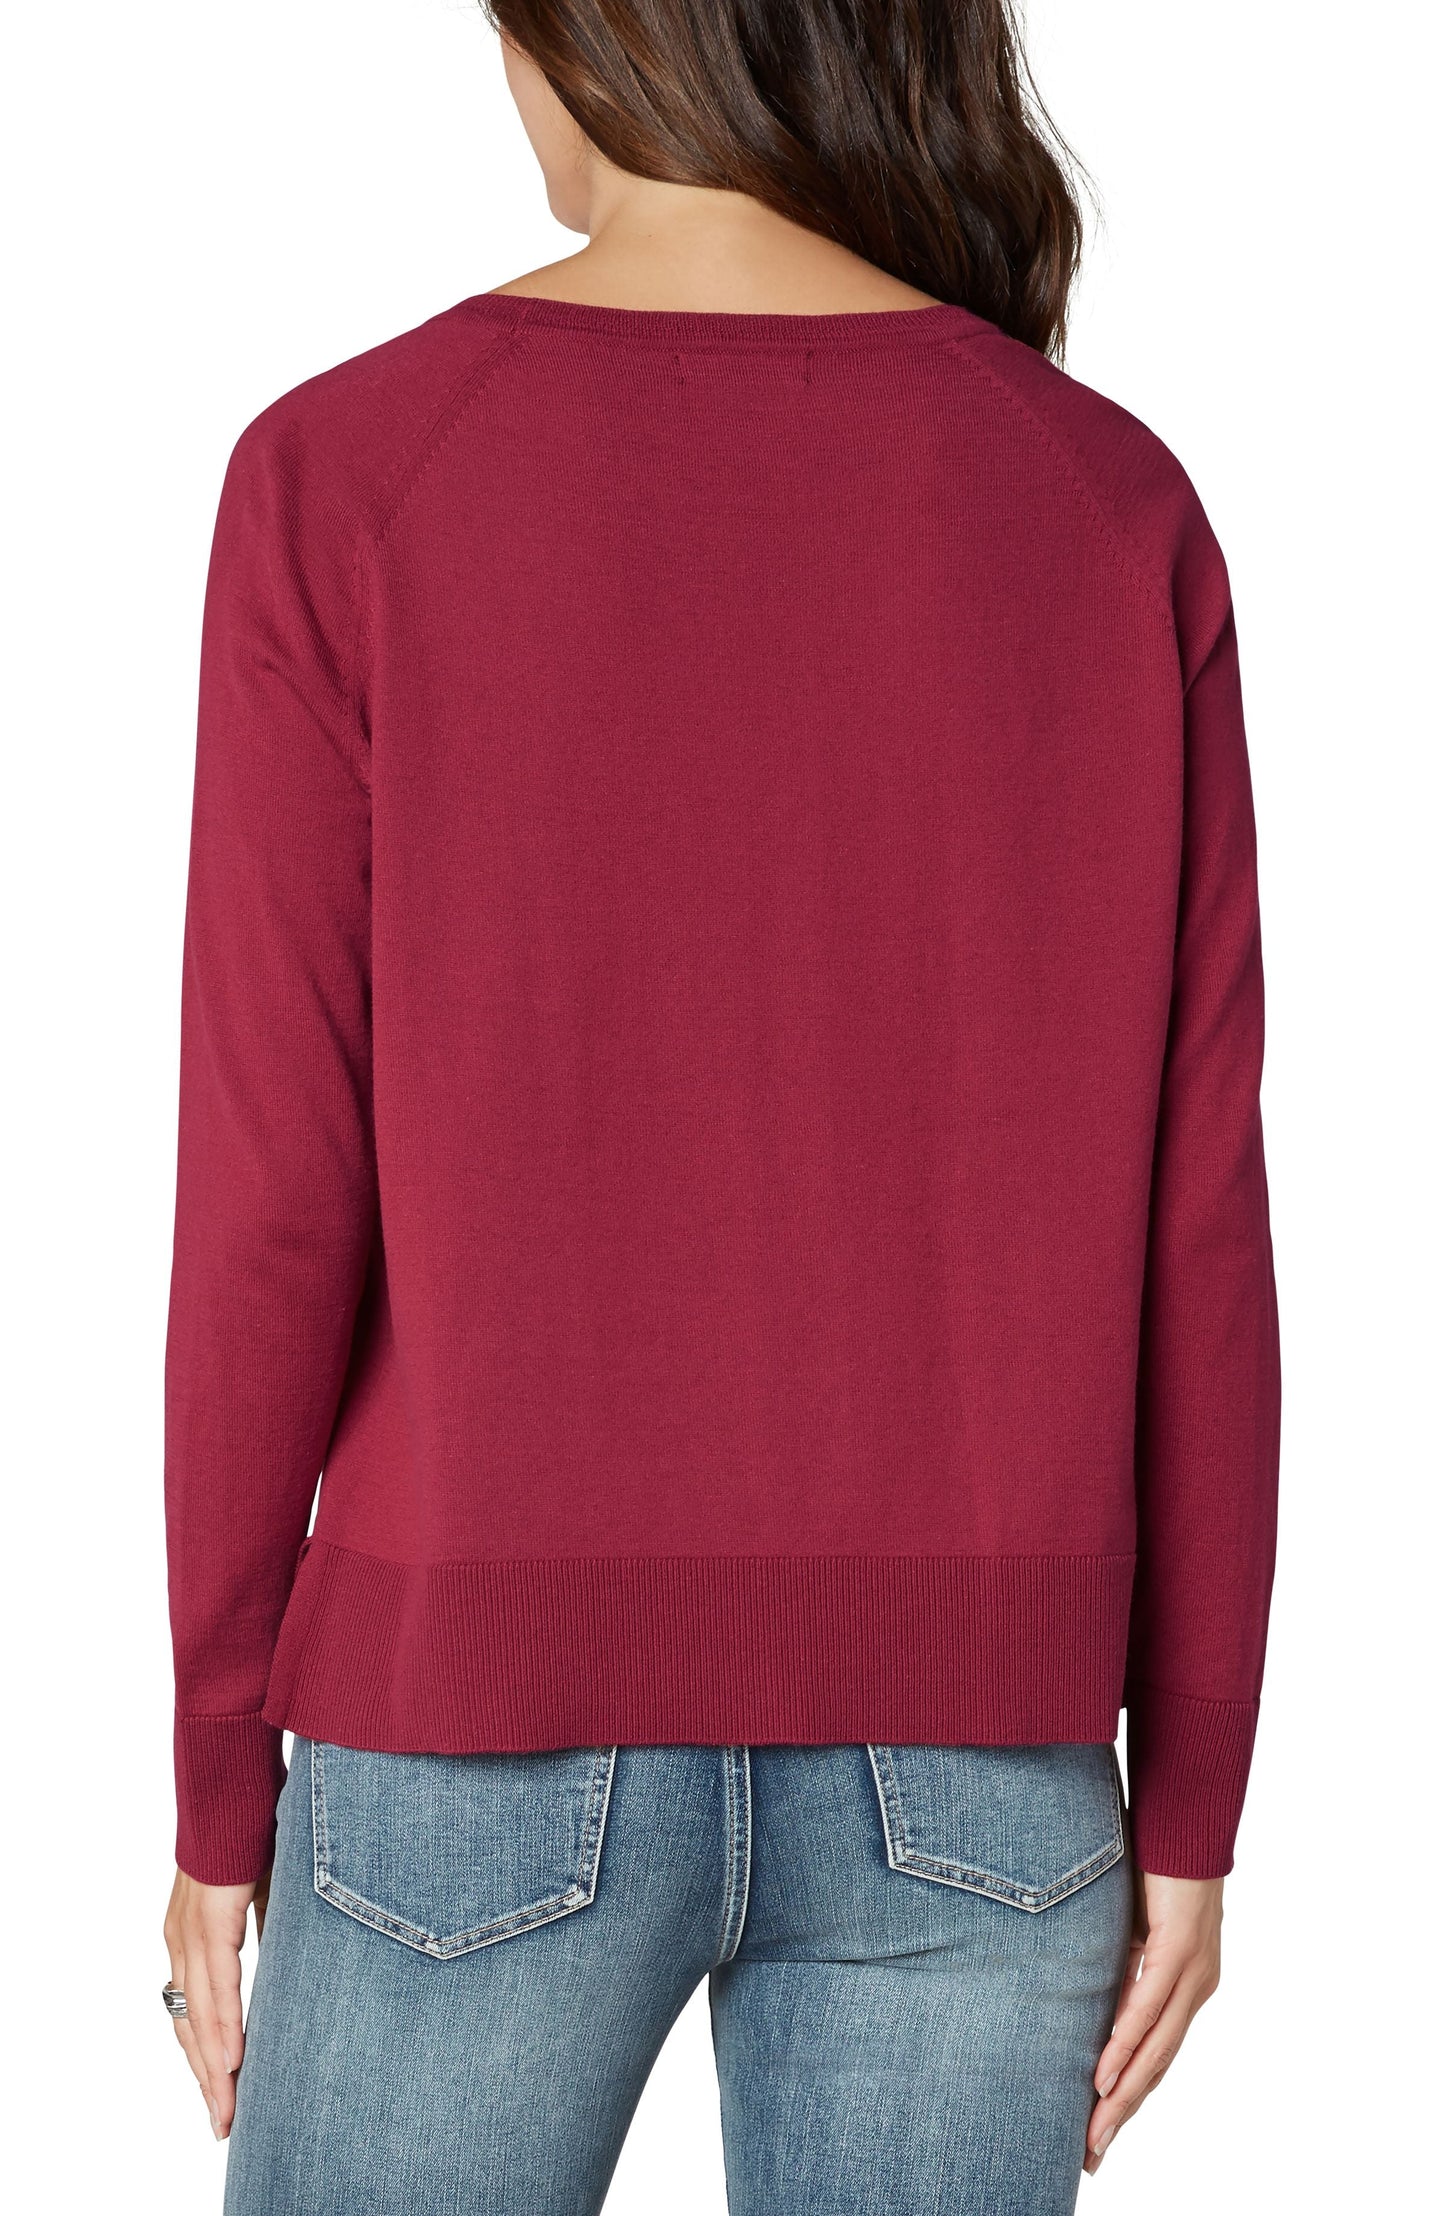 Liverpool Raglan Long Sleeve Sweater (Saffron Heather and Raspberry)